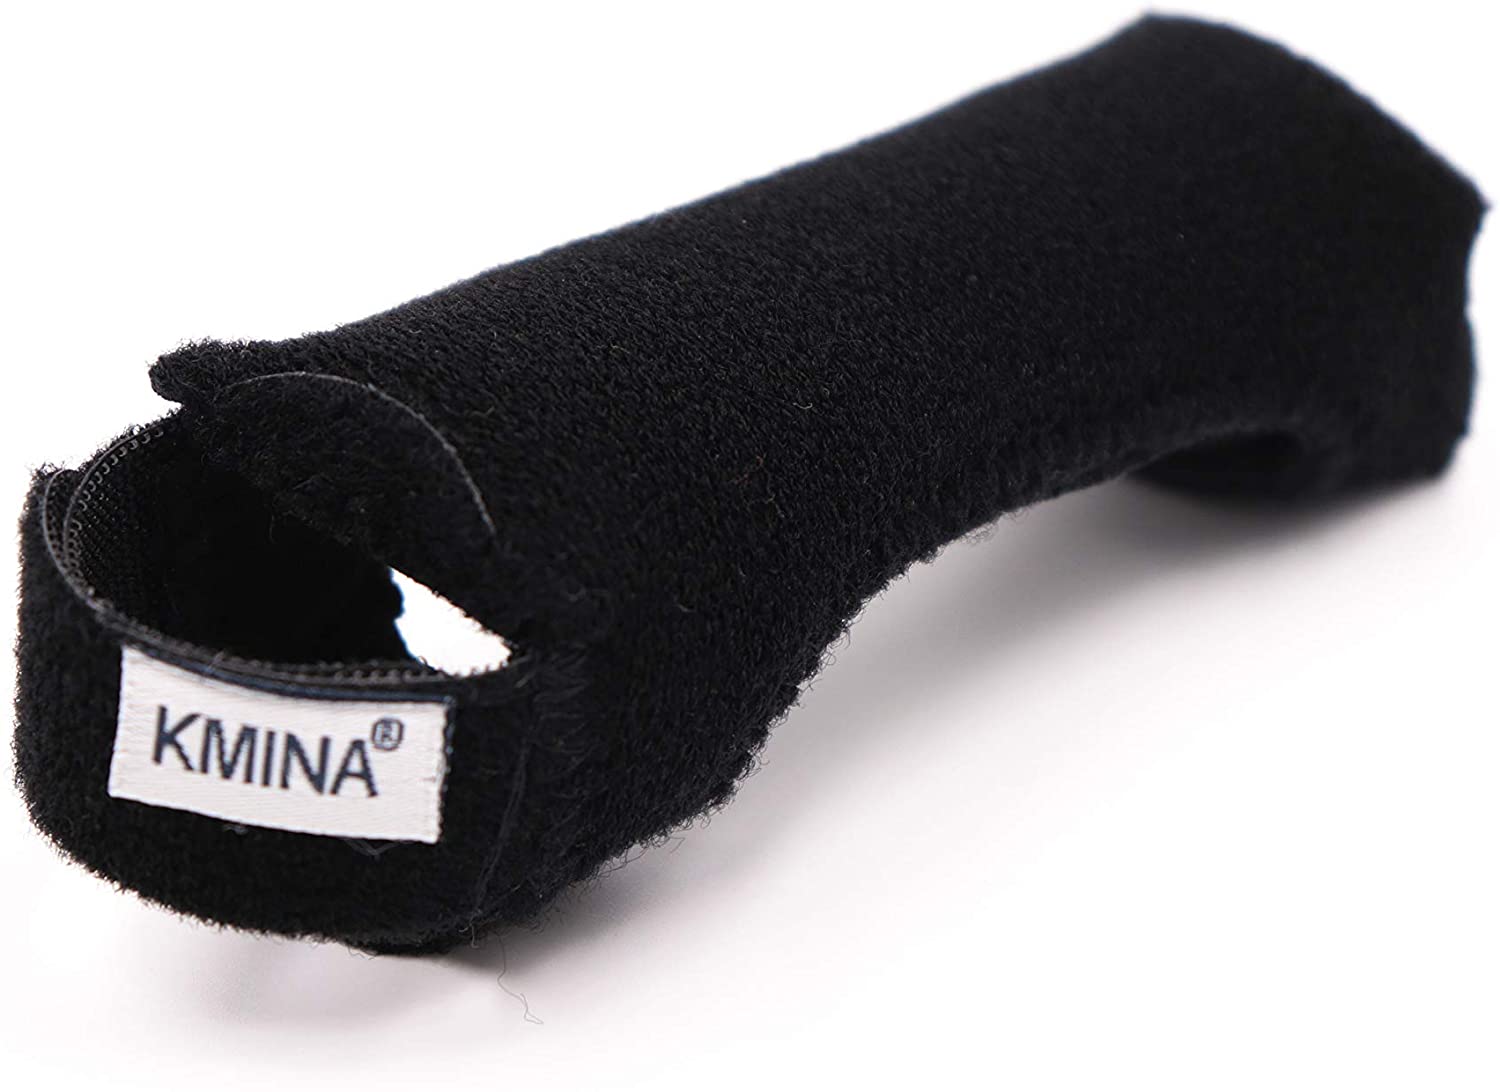 KMINA - crutch pad (x2 pcs), crutch pad, crutch grip pad, pad for crutch, accessory against friction